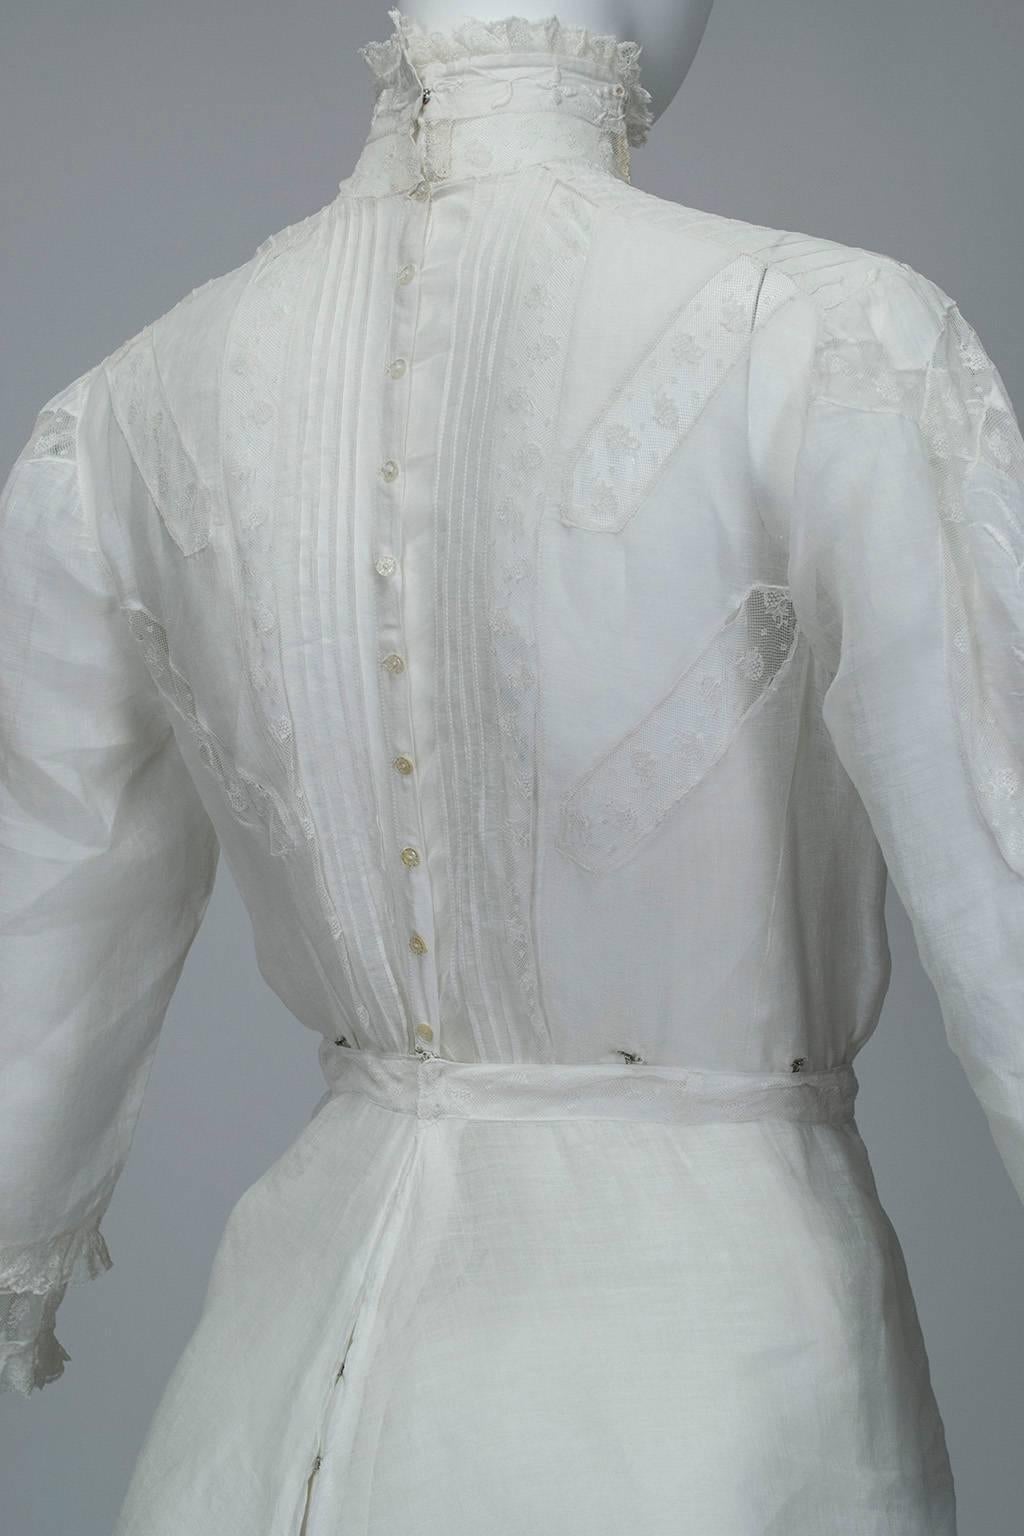 Victorian Handkerchief Hem Eyelet and Lace Bustle Tea Dress 1